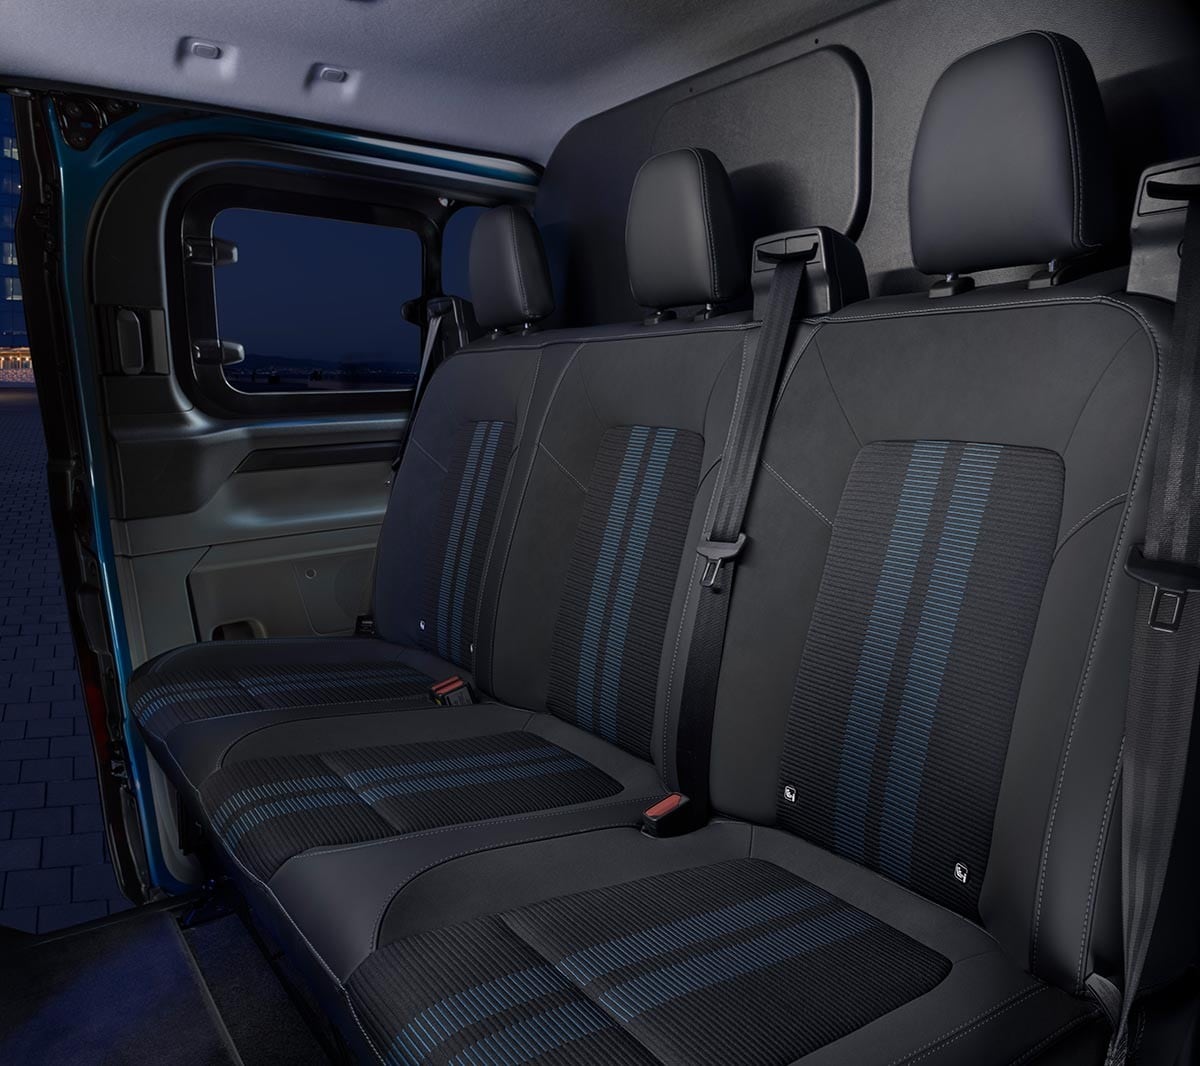 Ford Transit Custom interior view